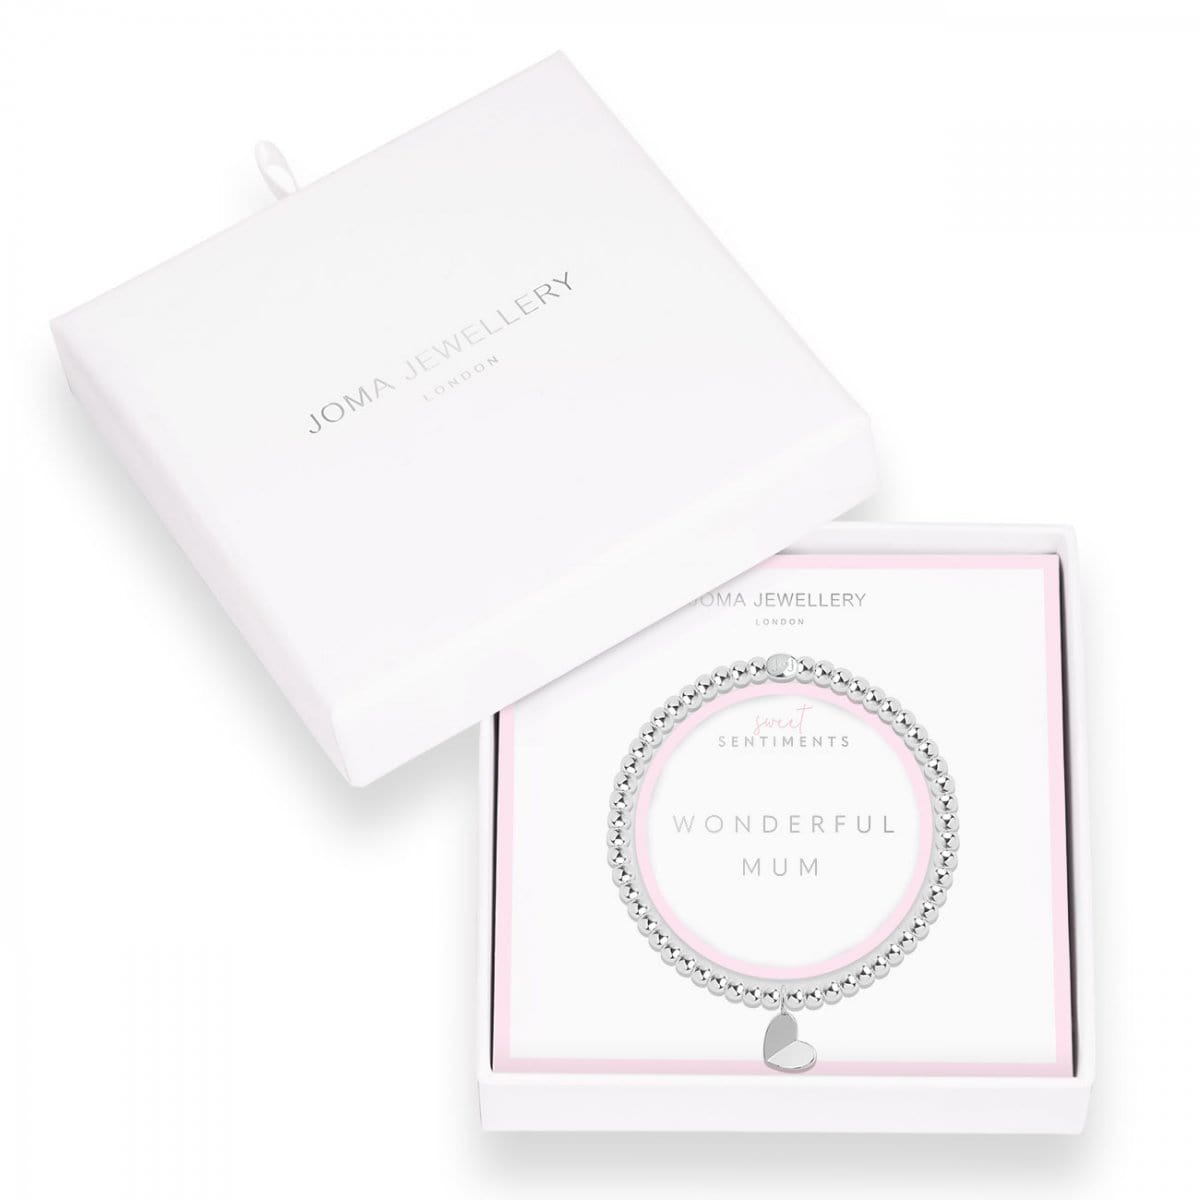 Joma Jewellery Bracelet Joma Jewellery Sweet Sentiment Gift Boxed Bracelet - Wonderful Mum